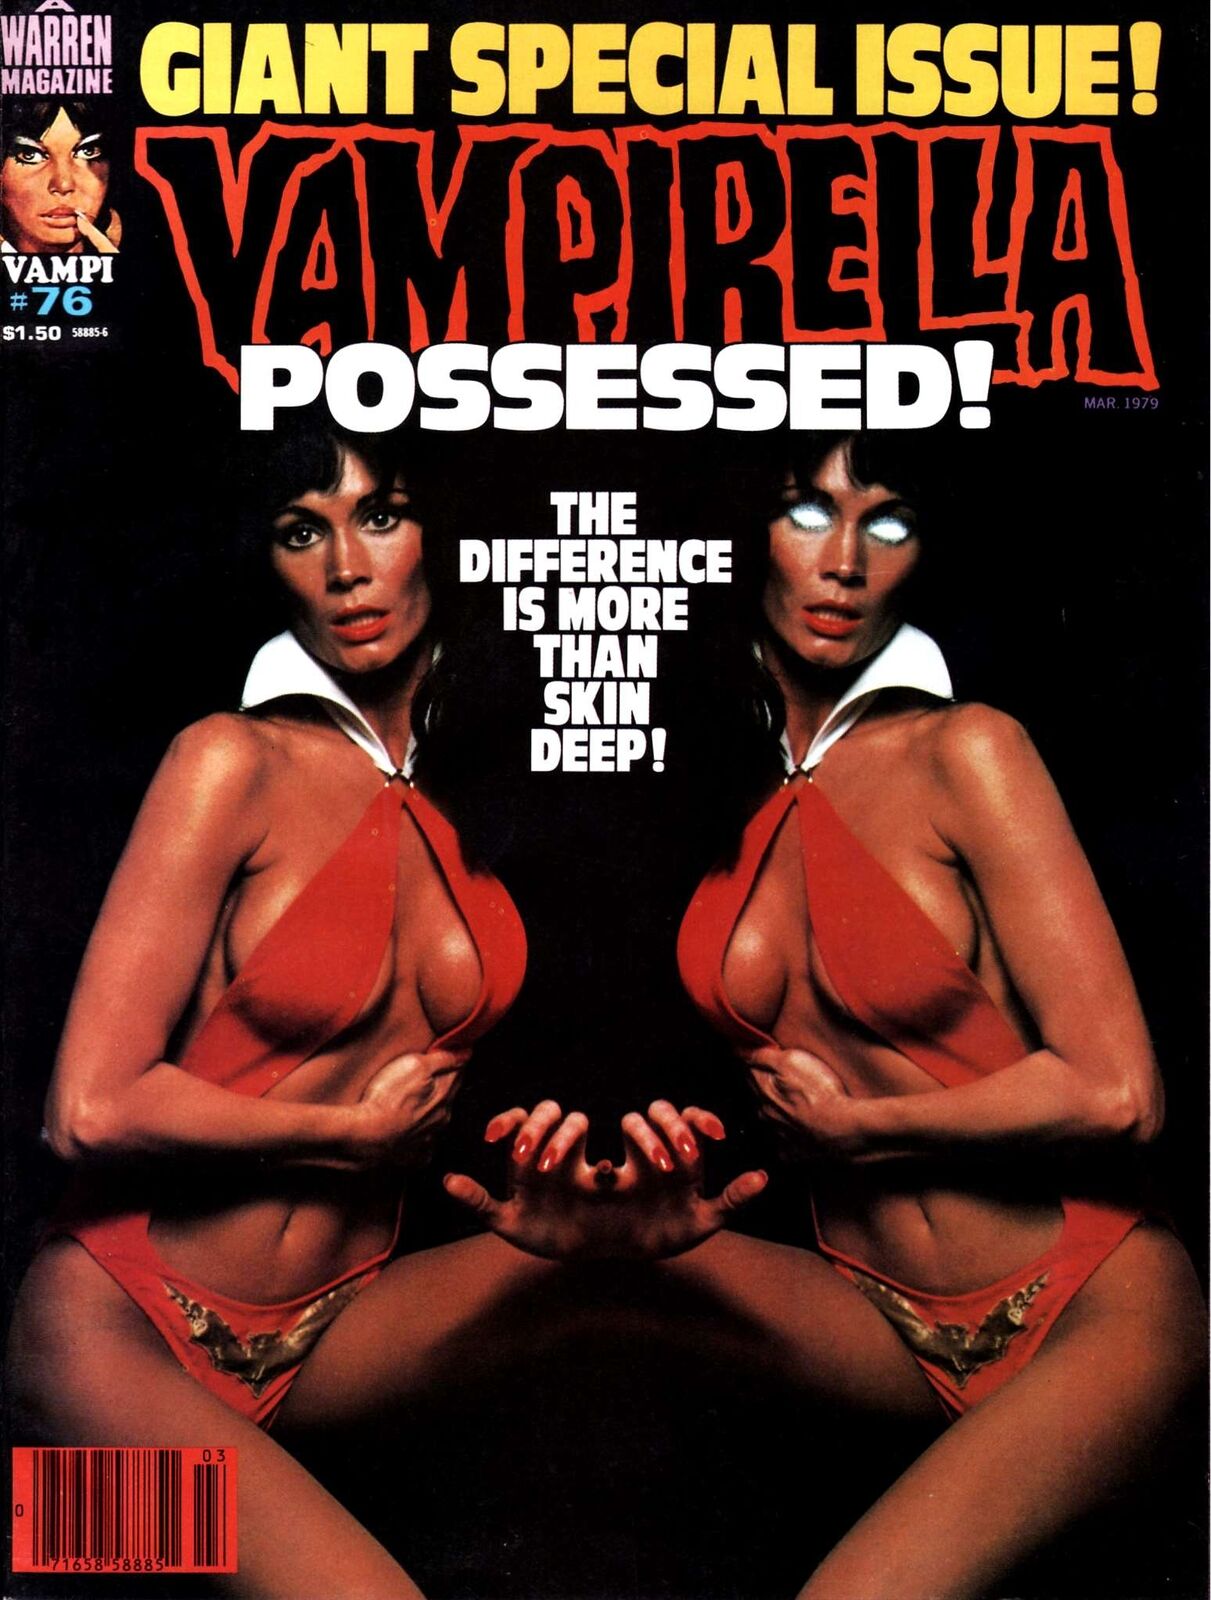 Vampirella (Magazine) #76 FN; Warren | photo cover - we combine shipping